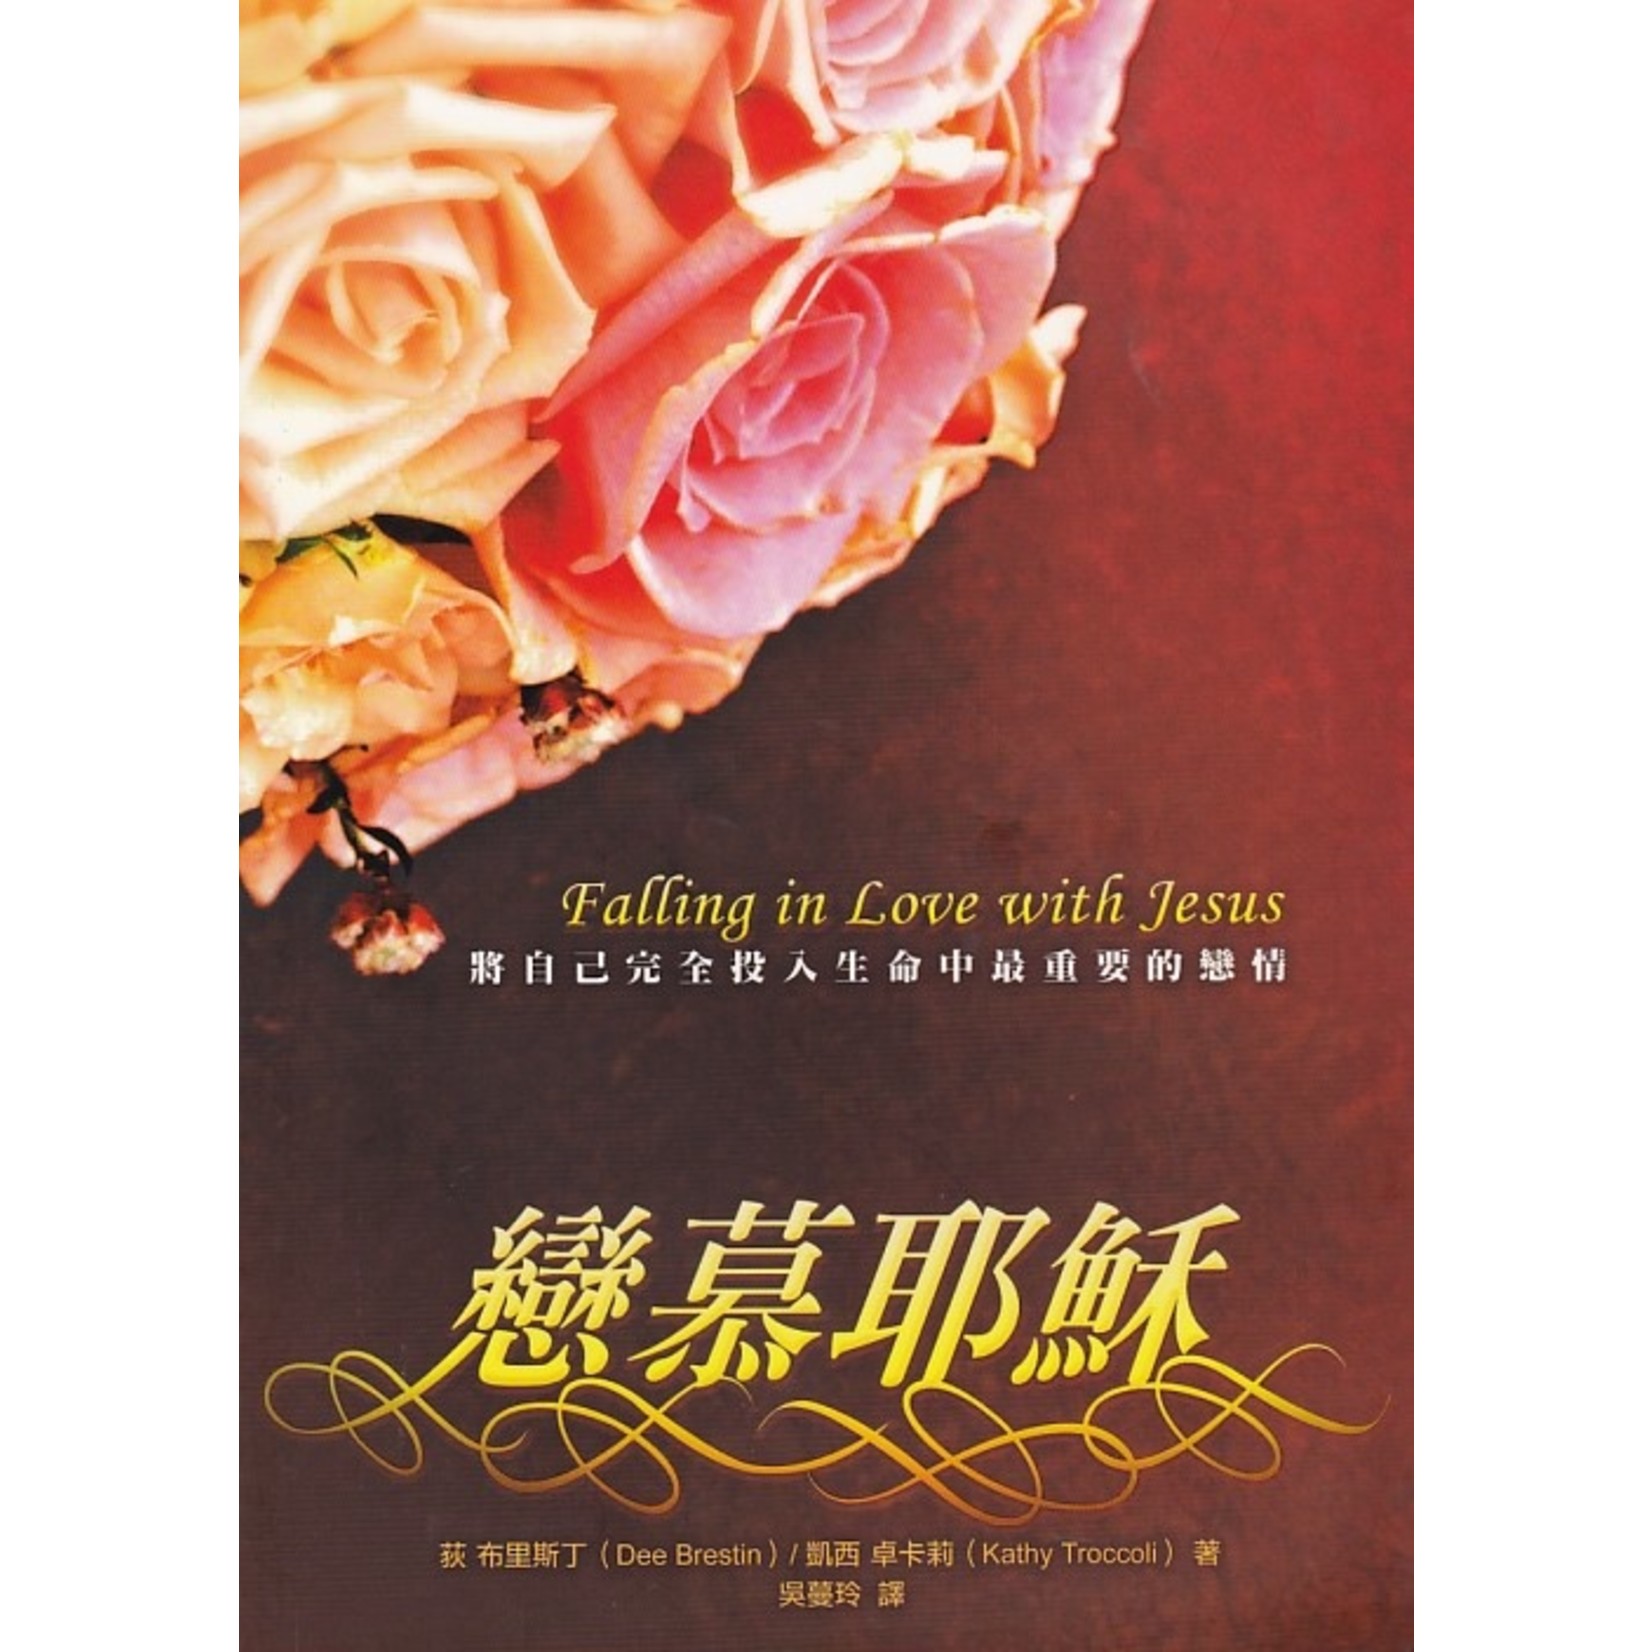 中國學園傳道會 Taiwan Campus Crusade for Christ 戀慕耶穌：將自己完全投入生命中最重要的戀情 | Falling in Love with Jesus